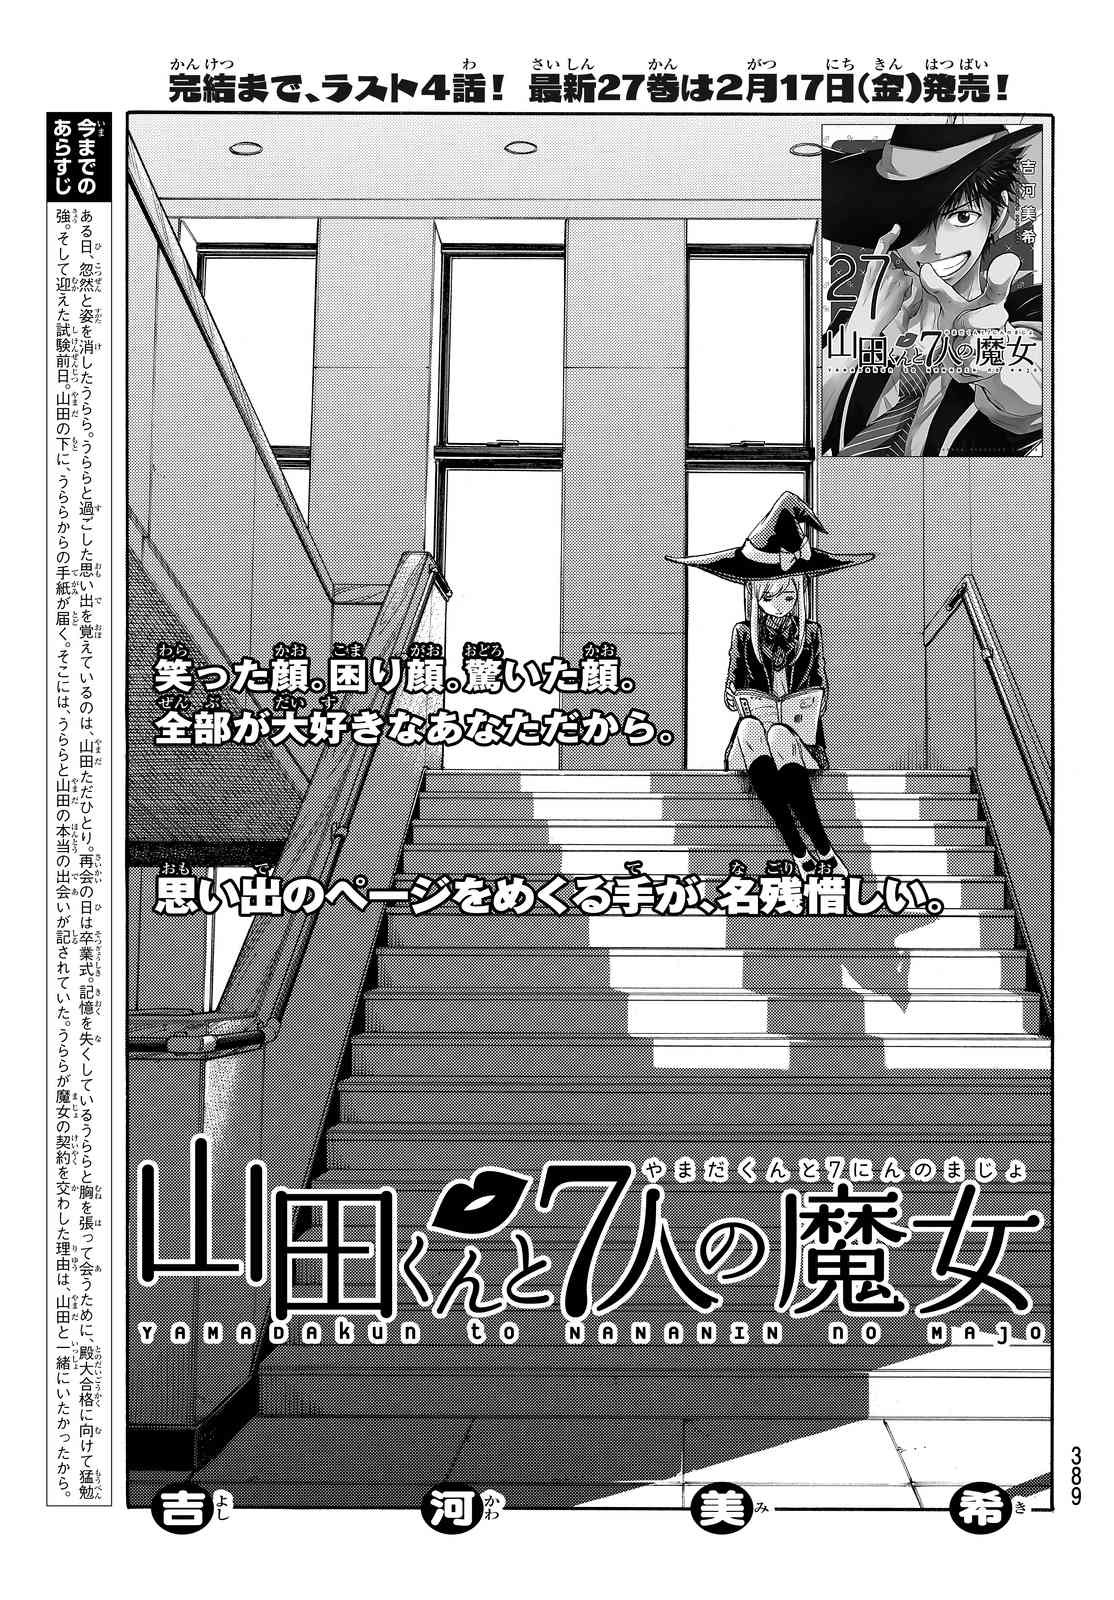 Yamada-kun to 7-nin no Majo - Chapter 240 - Page 1